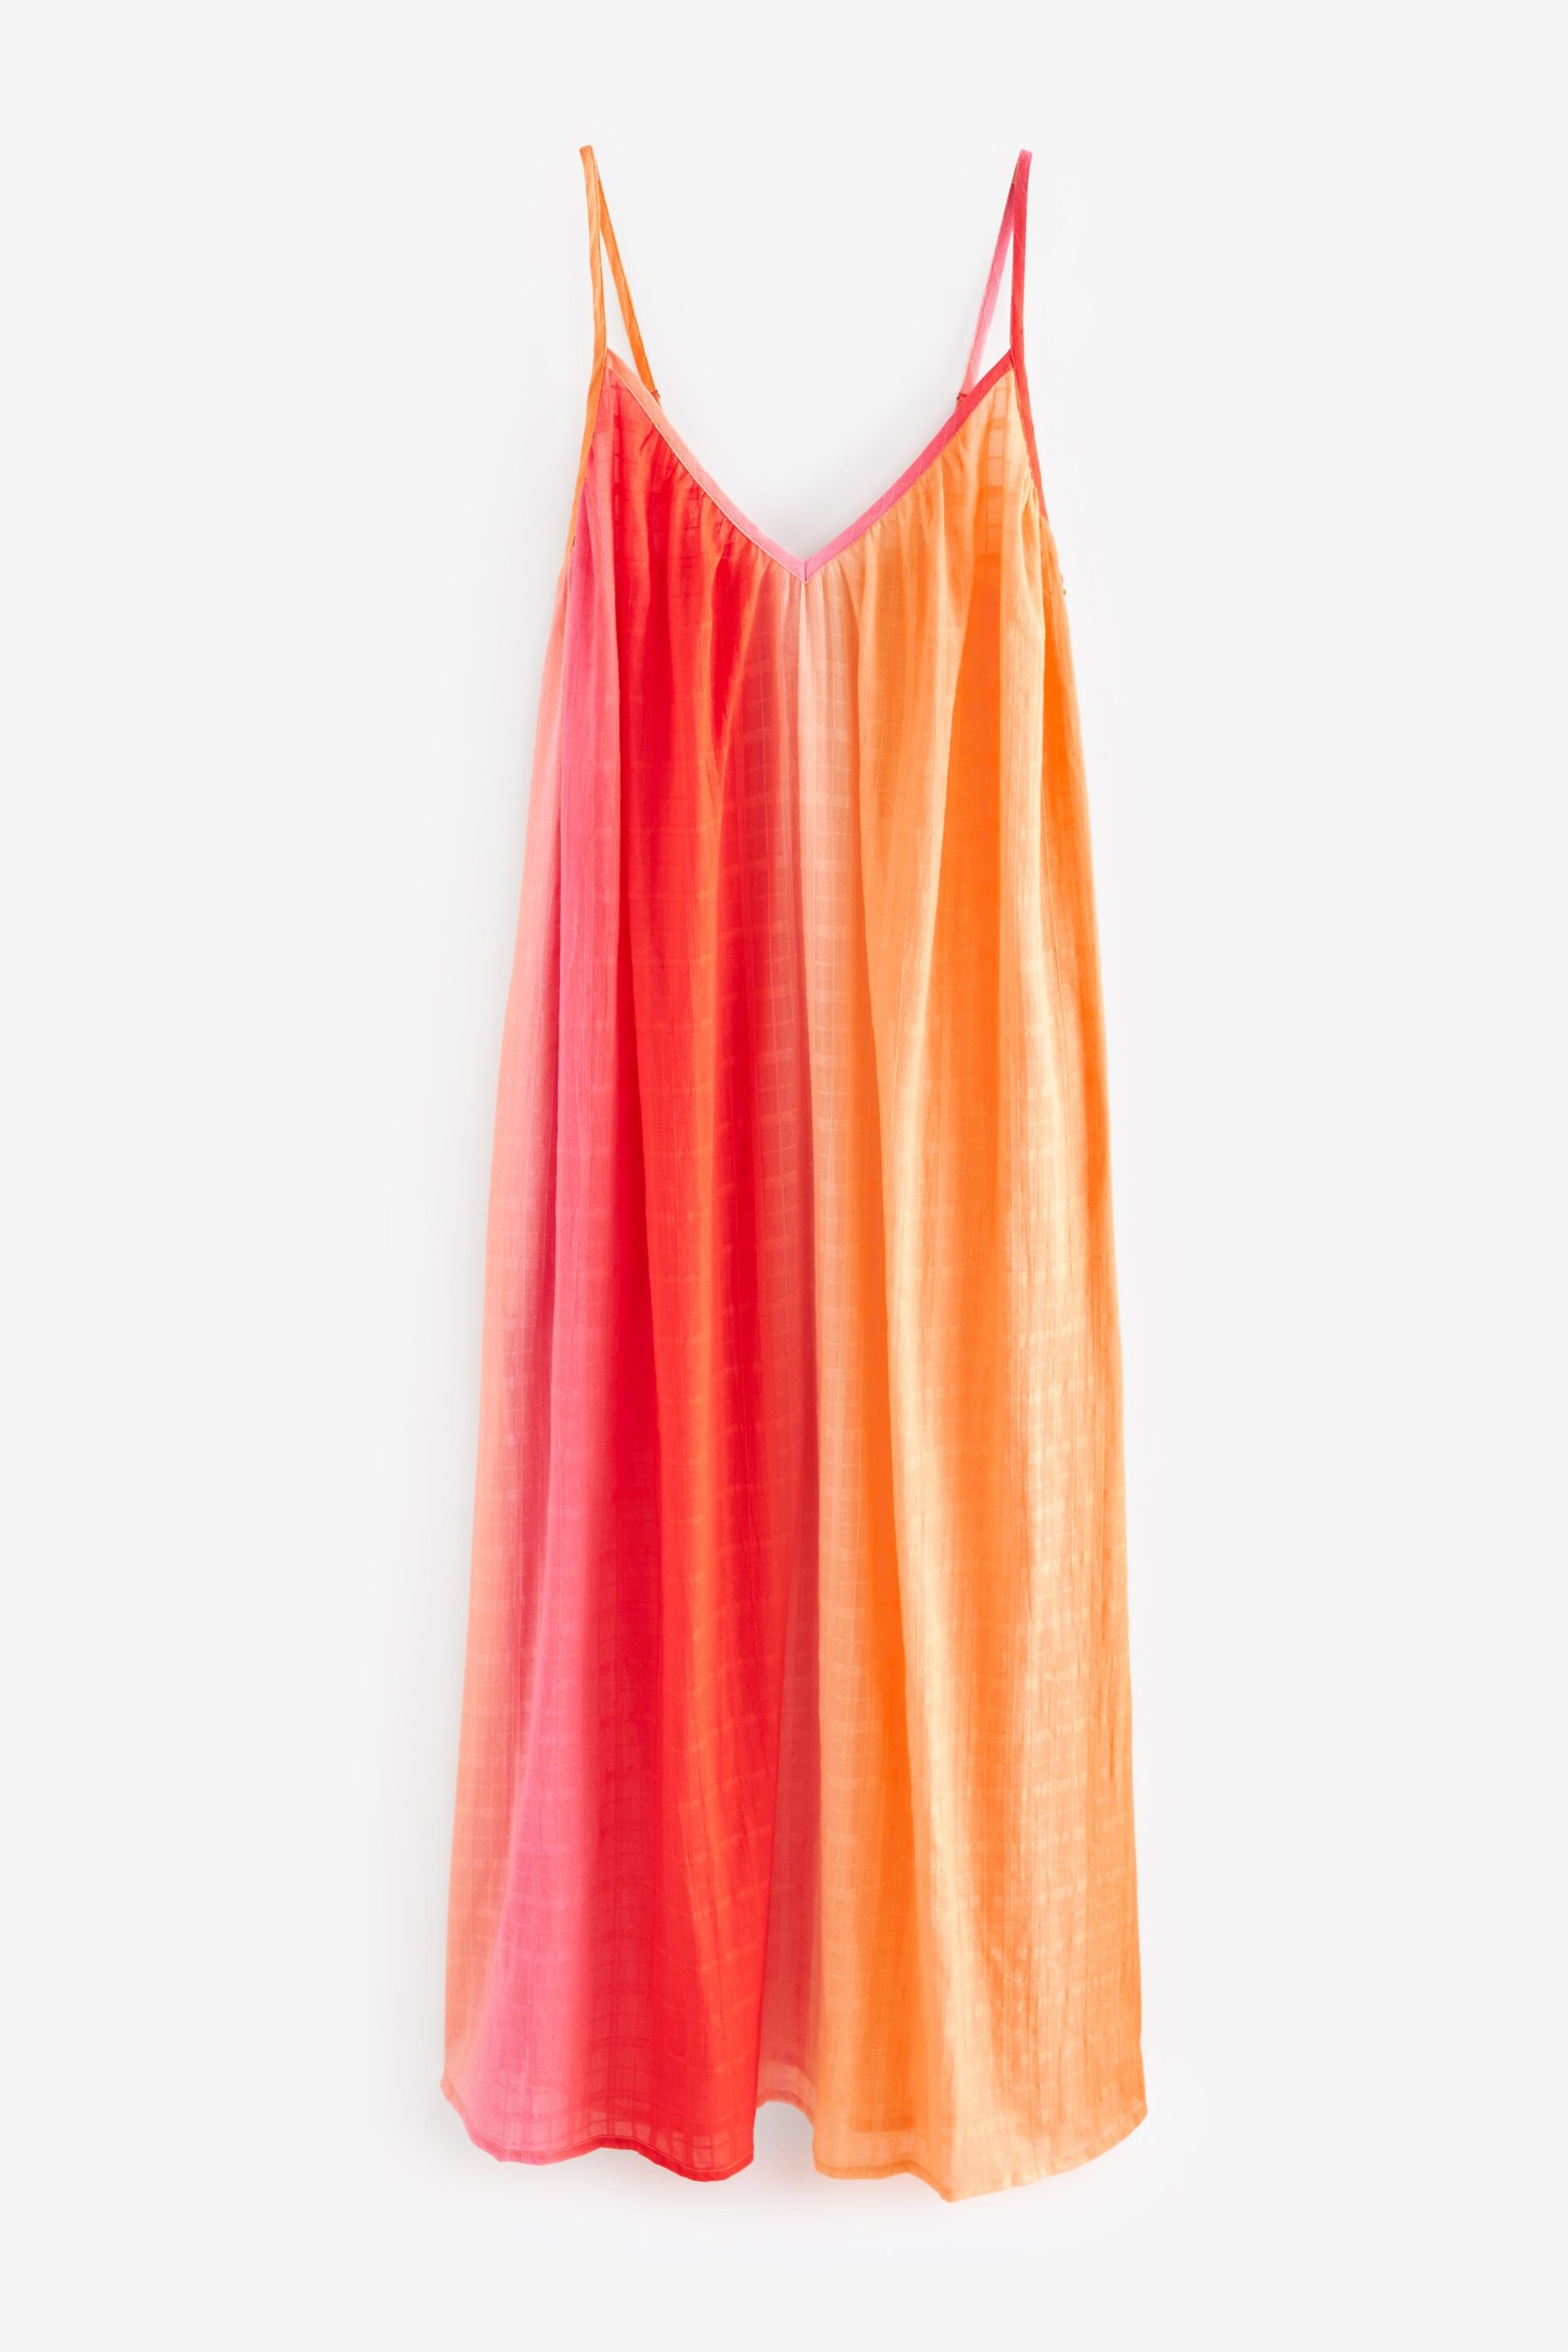 Orange/Pink Ombre Textured Volume Summer Maxi Dress - Image 7 of 8